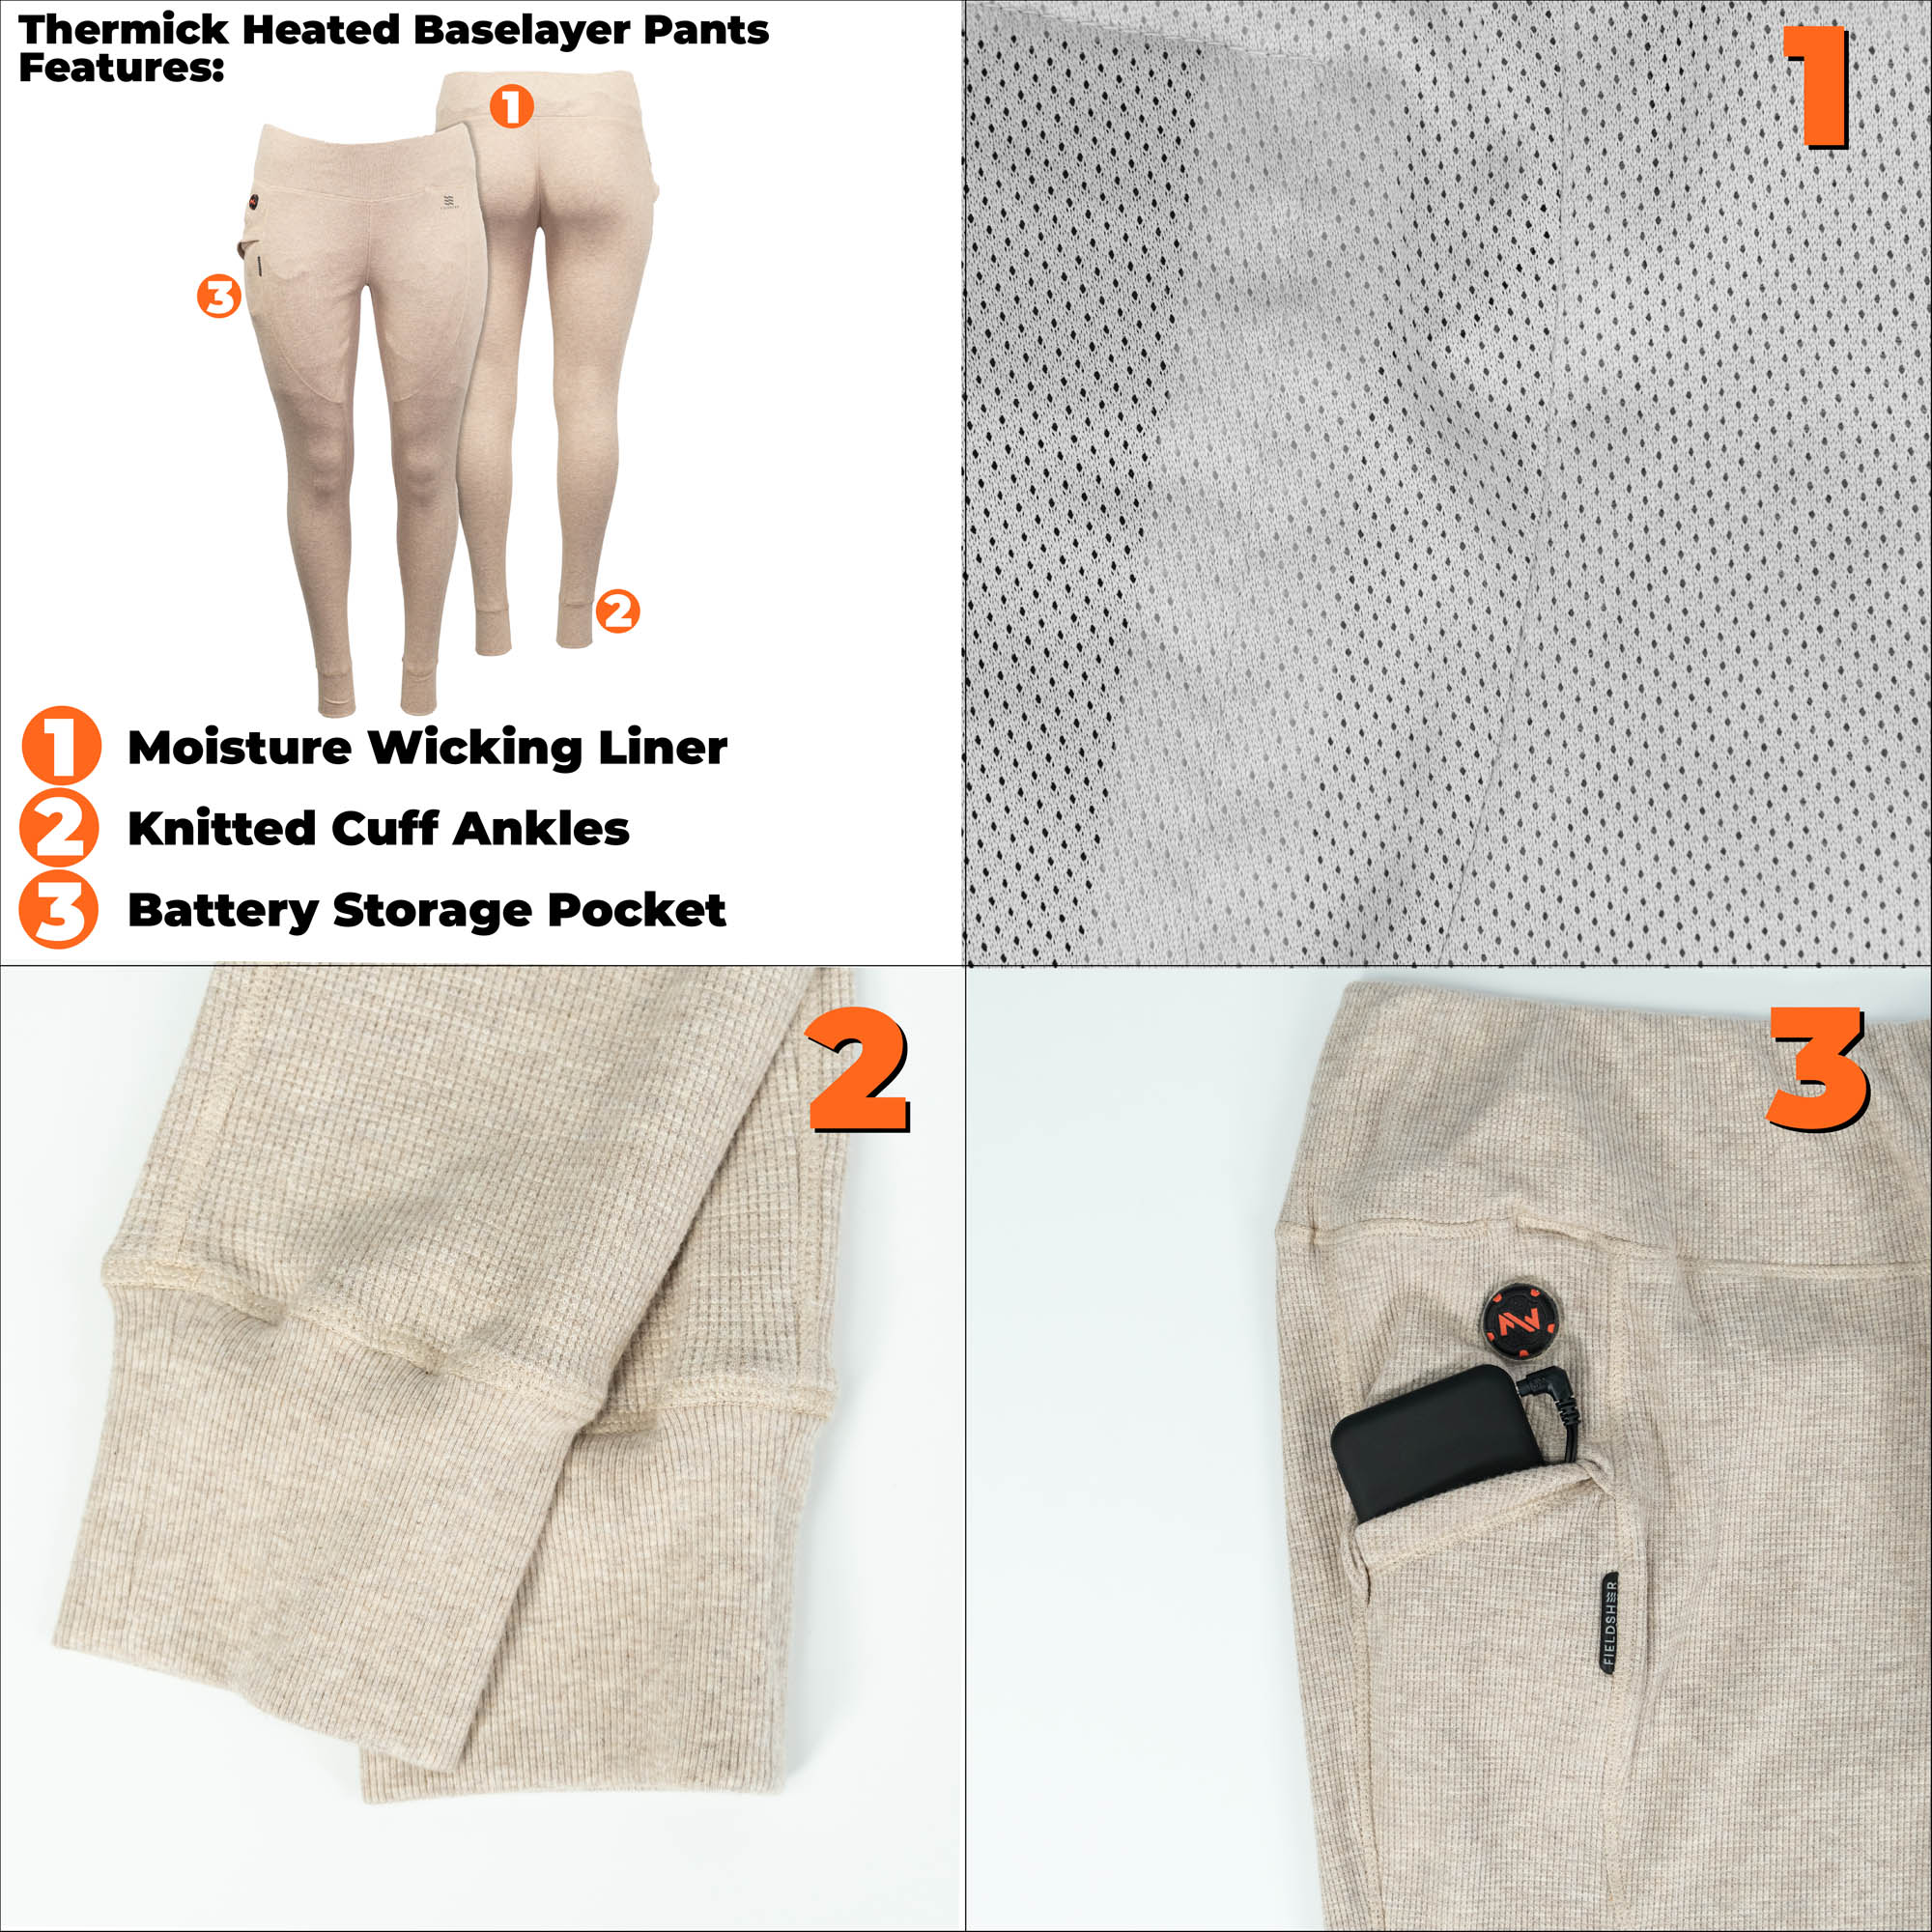 Mobile Warming Technology Baselayers Proton Baselayer Pant Women's Heated  Clothing